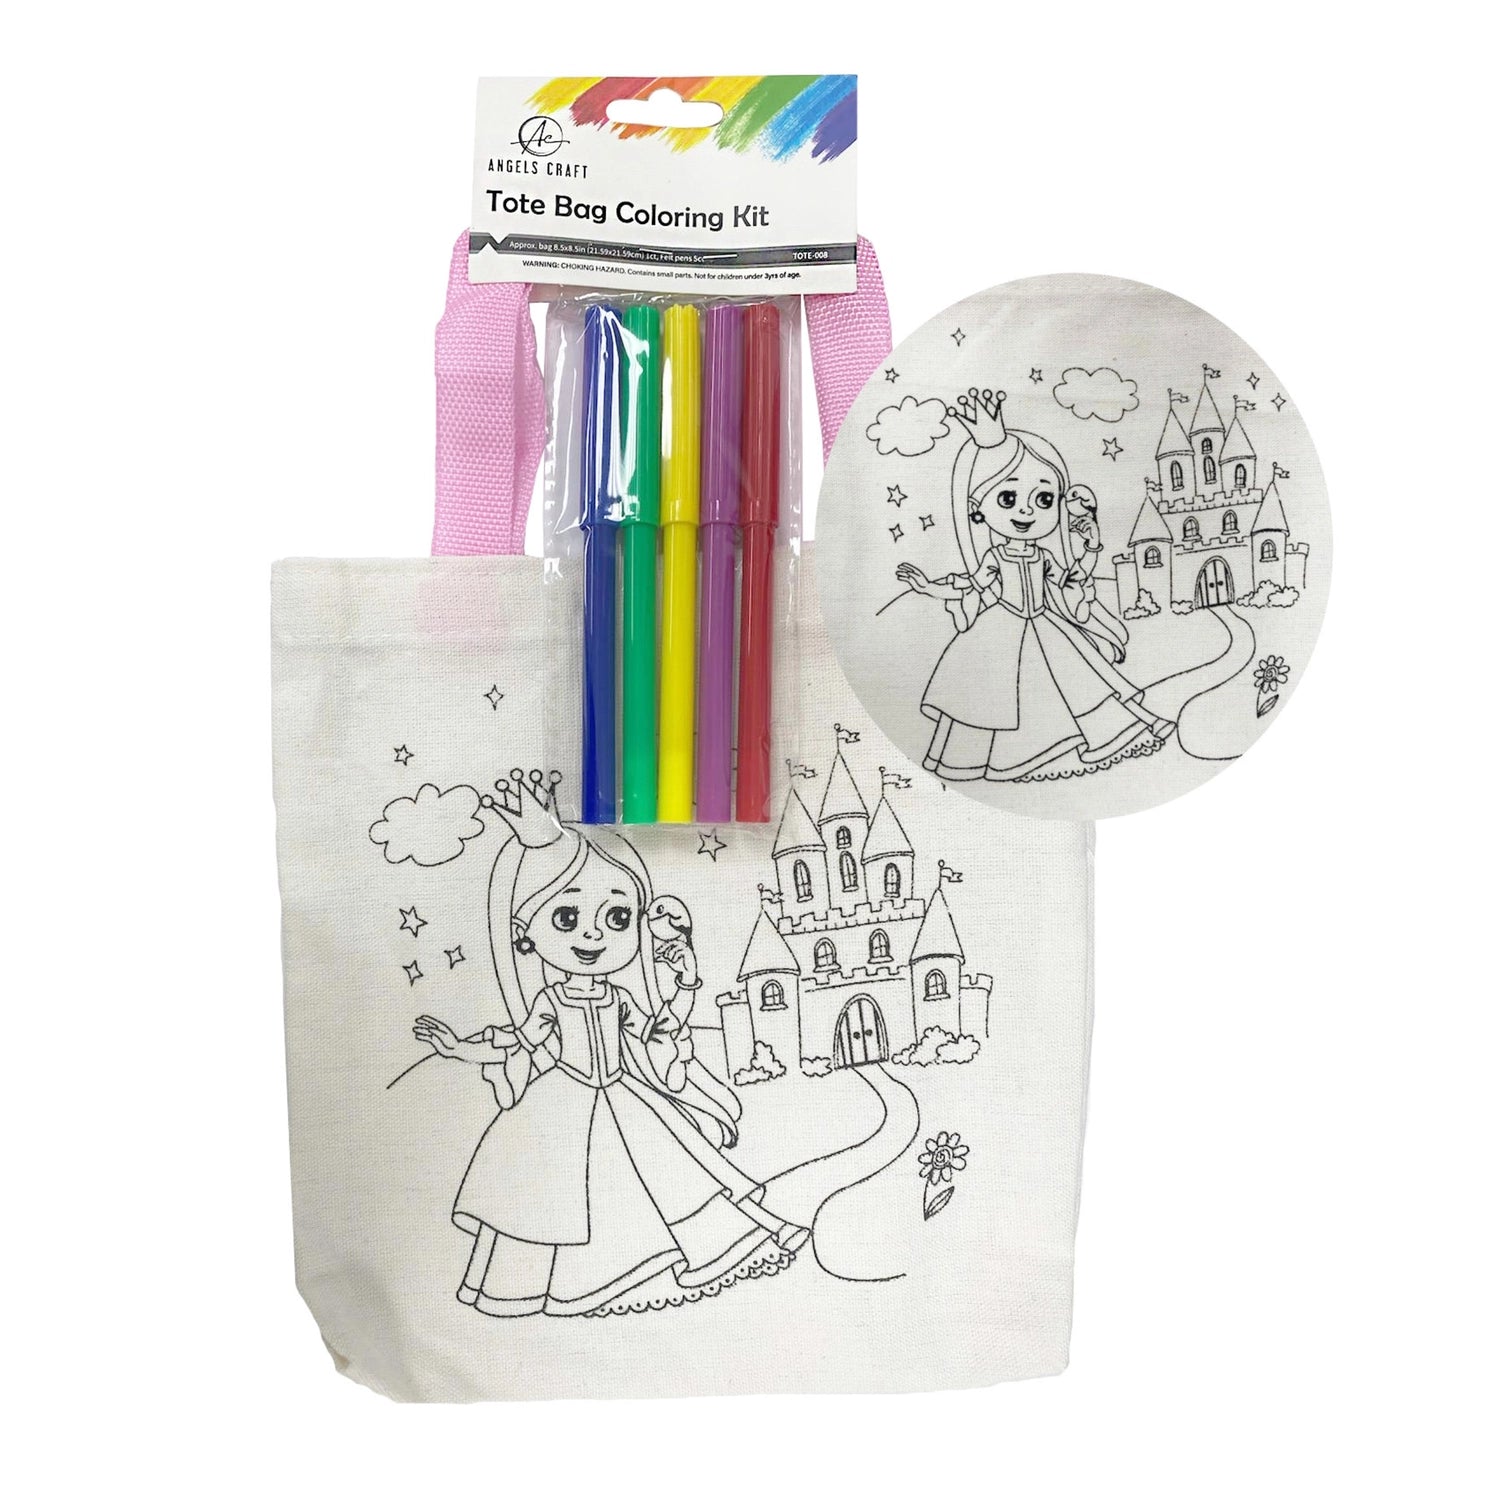 Angel Craft Tote Bag Coloring Kit (Shark/Princess)